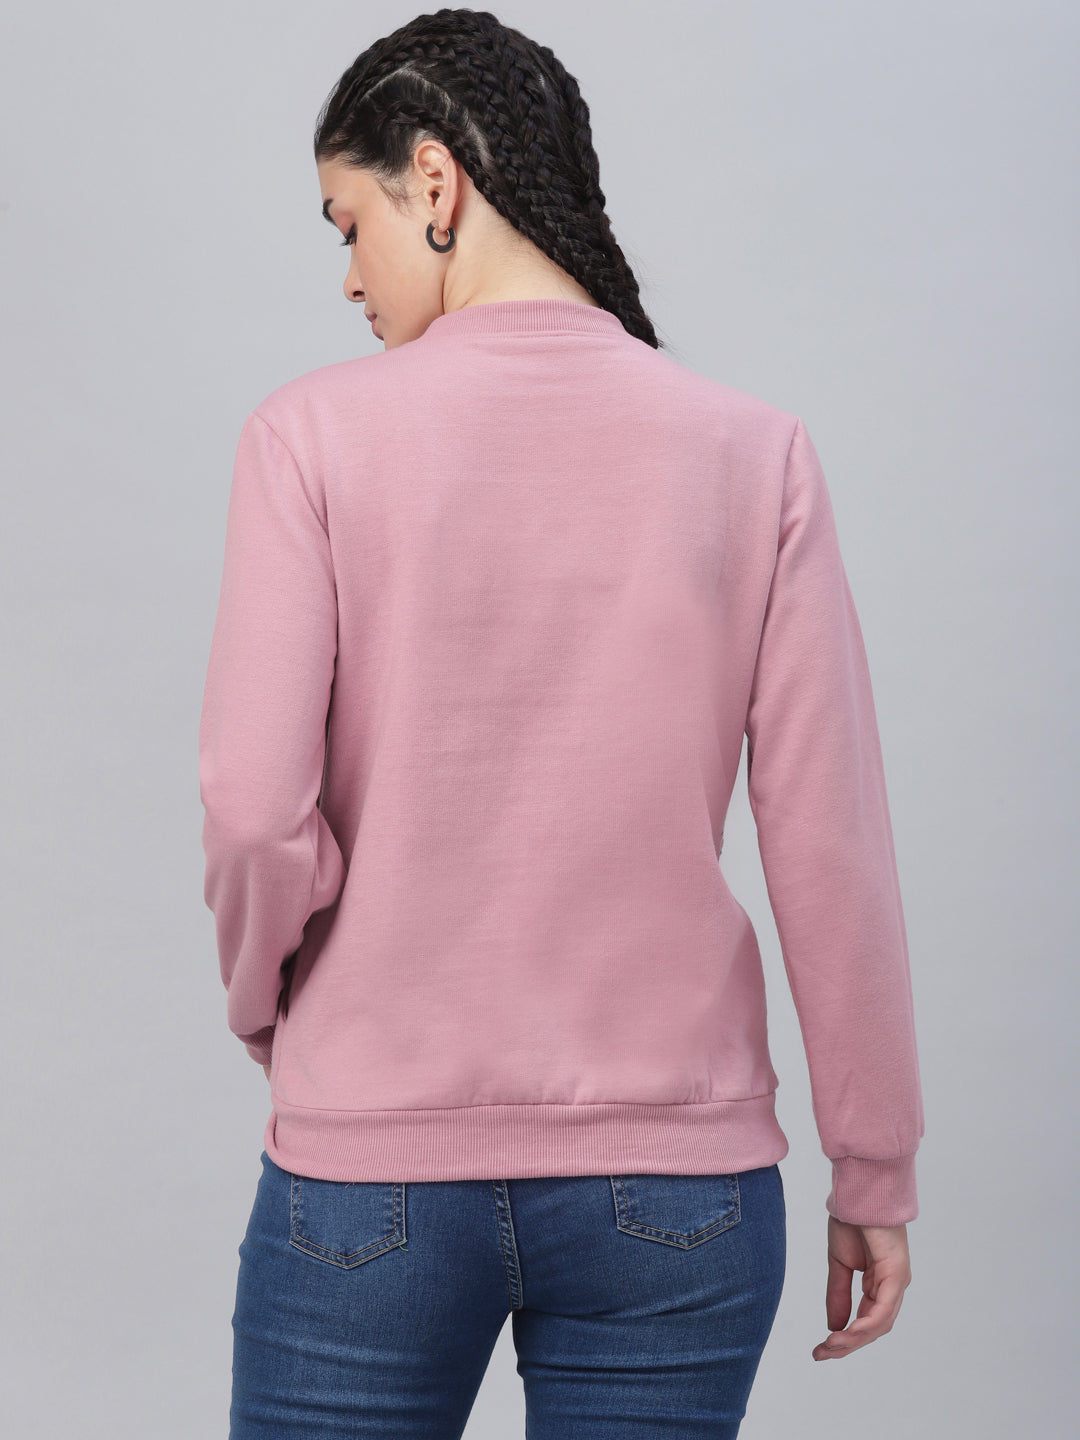 Athena Women Pink & Blue Embroidered Sweatshirt - Athena Lifestyle